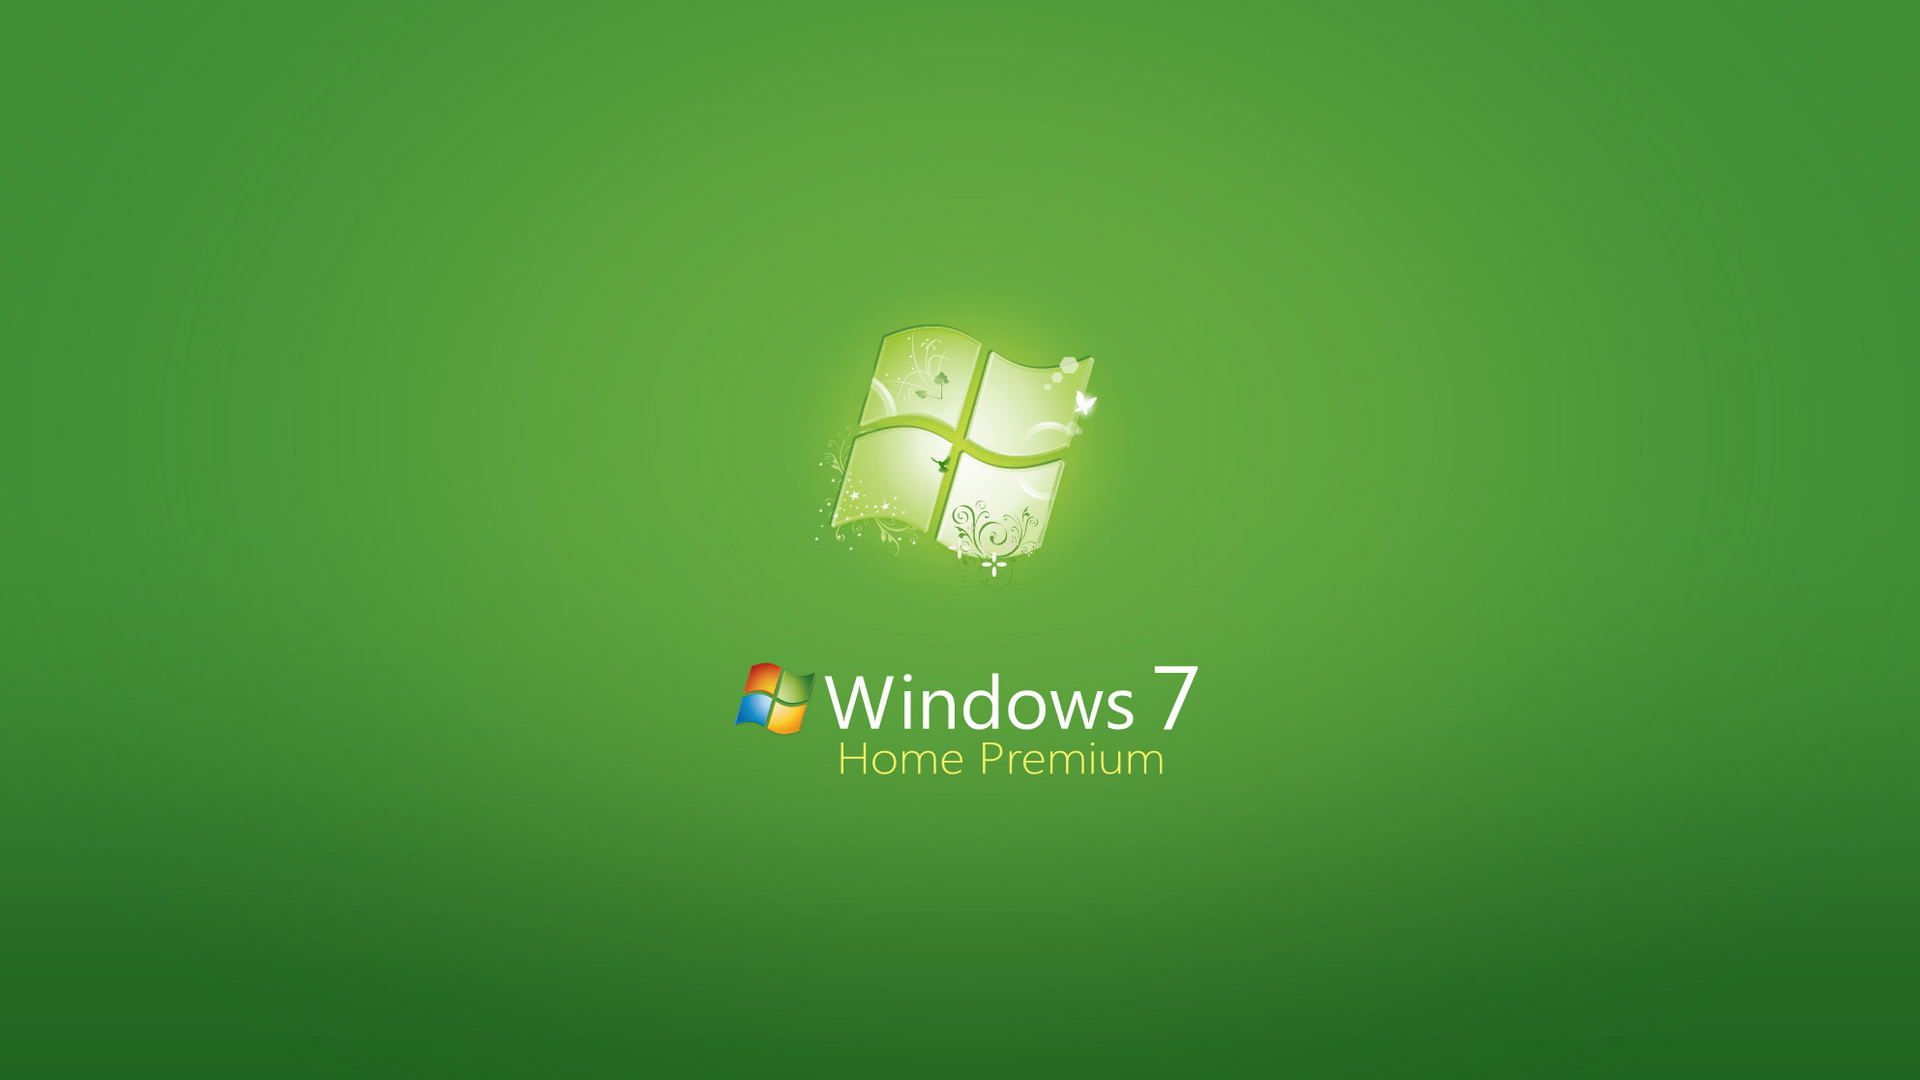 windows, logos, brands, background, green Full HD